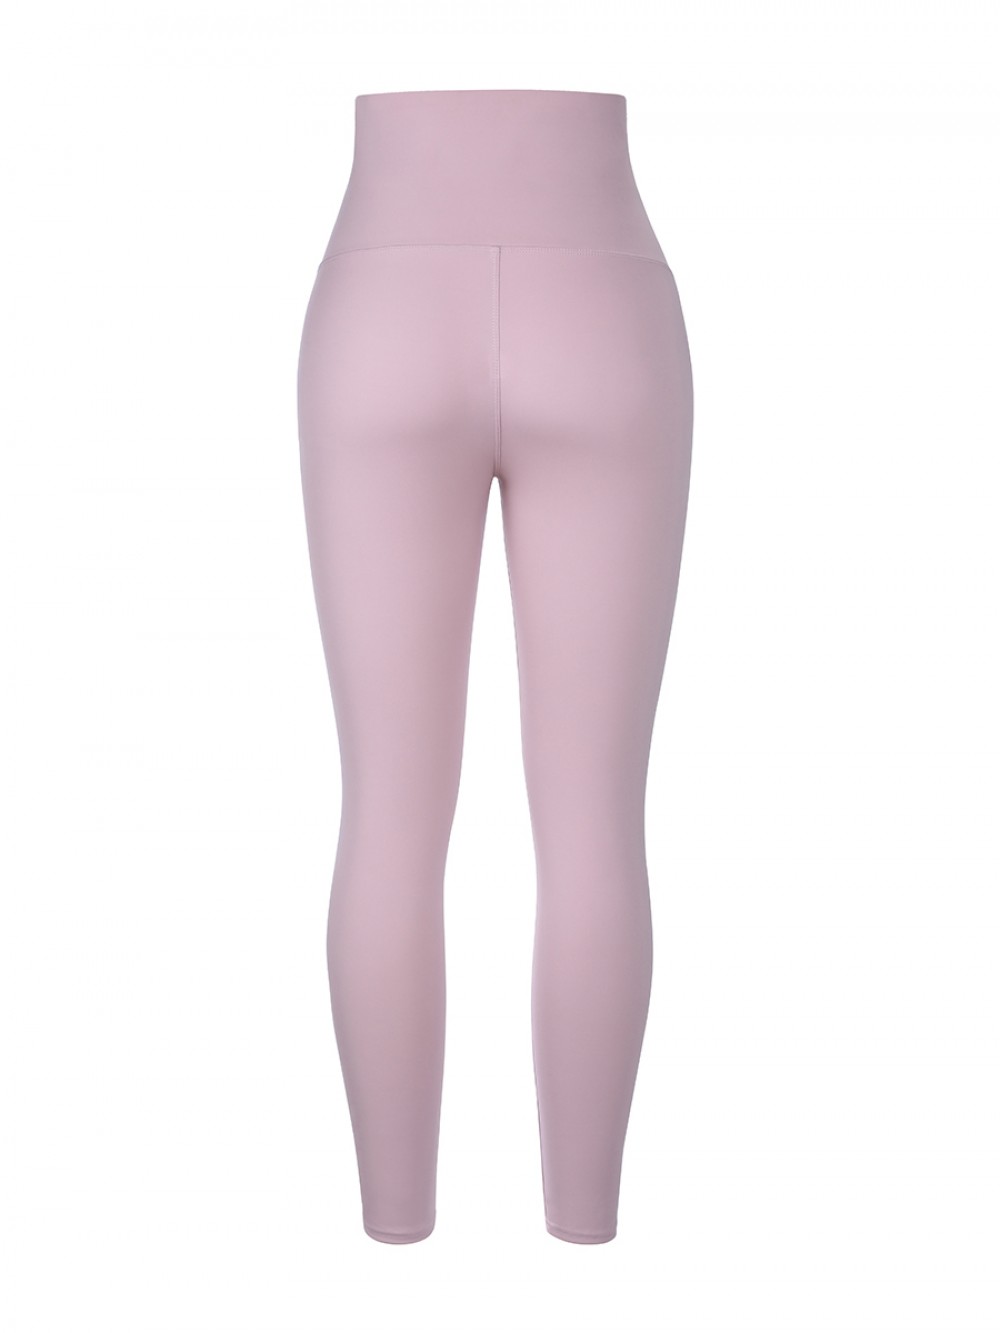 Light Pink 2-In-1 Shapewear Leggings High Waist Hidden Curves